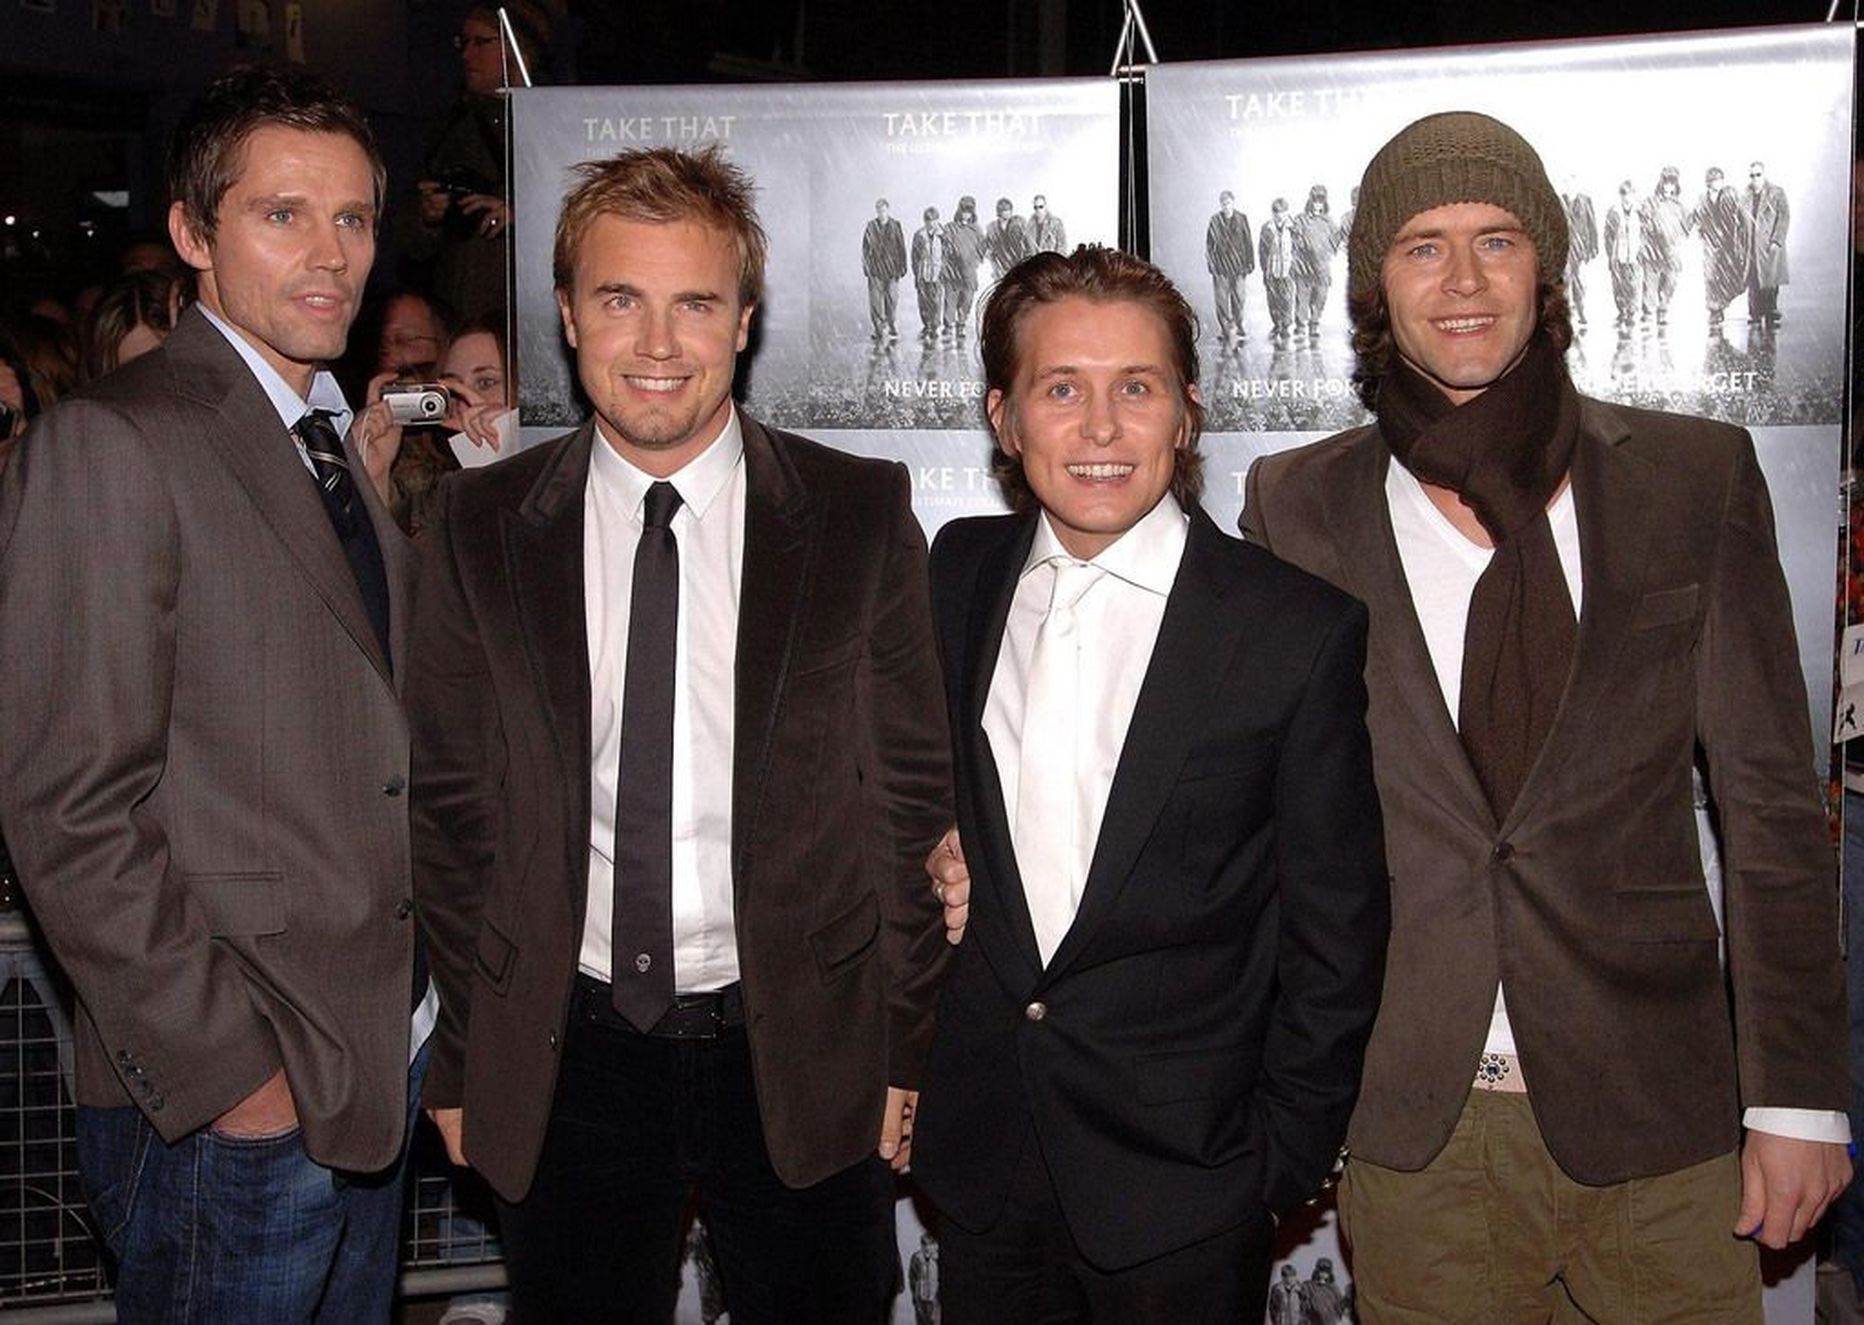 Ansambli Take That neli allesjäänud liiget - Jason Orange, Gary Barlow, Mark Owen ja Howard Donald